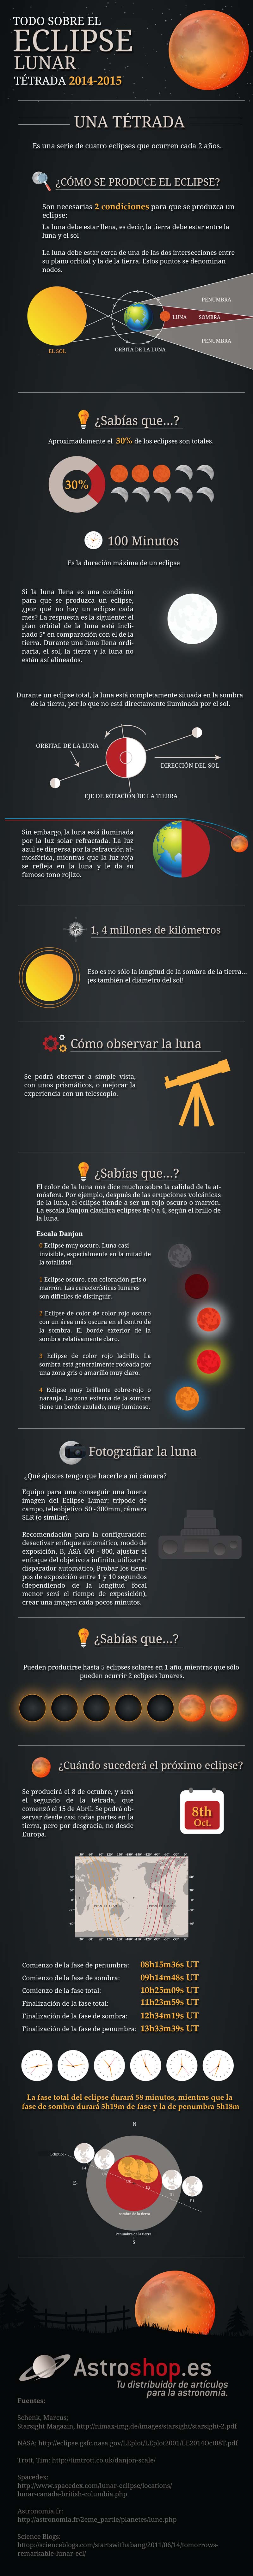 Infografía eclipse lunar